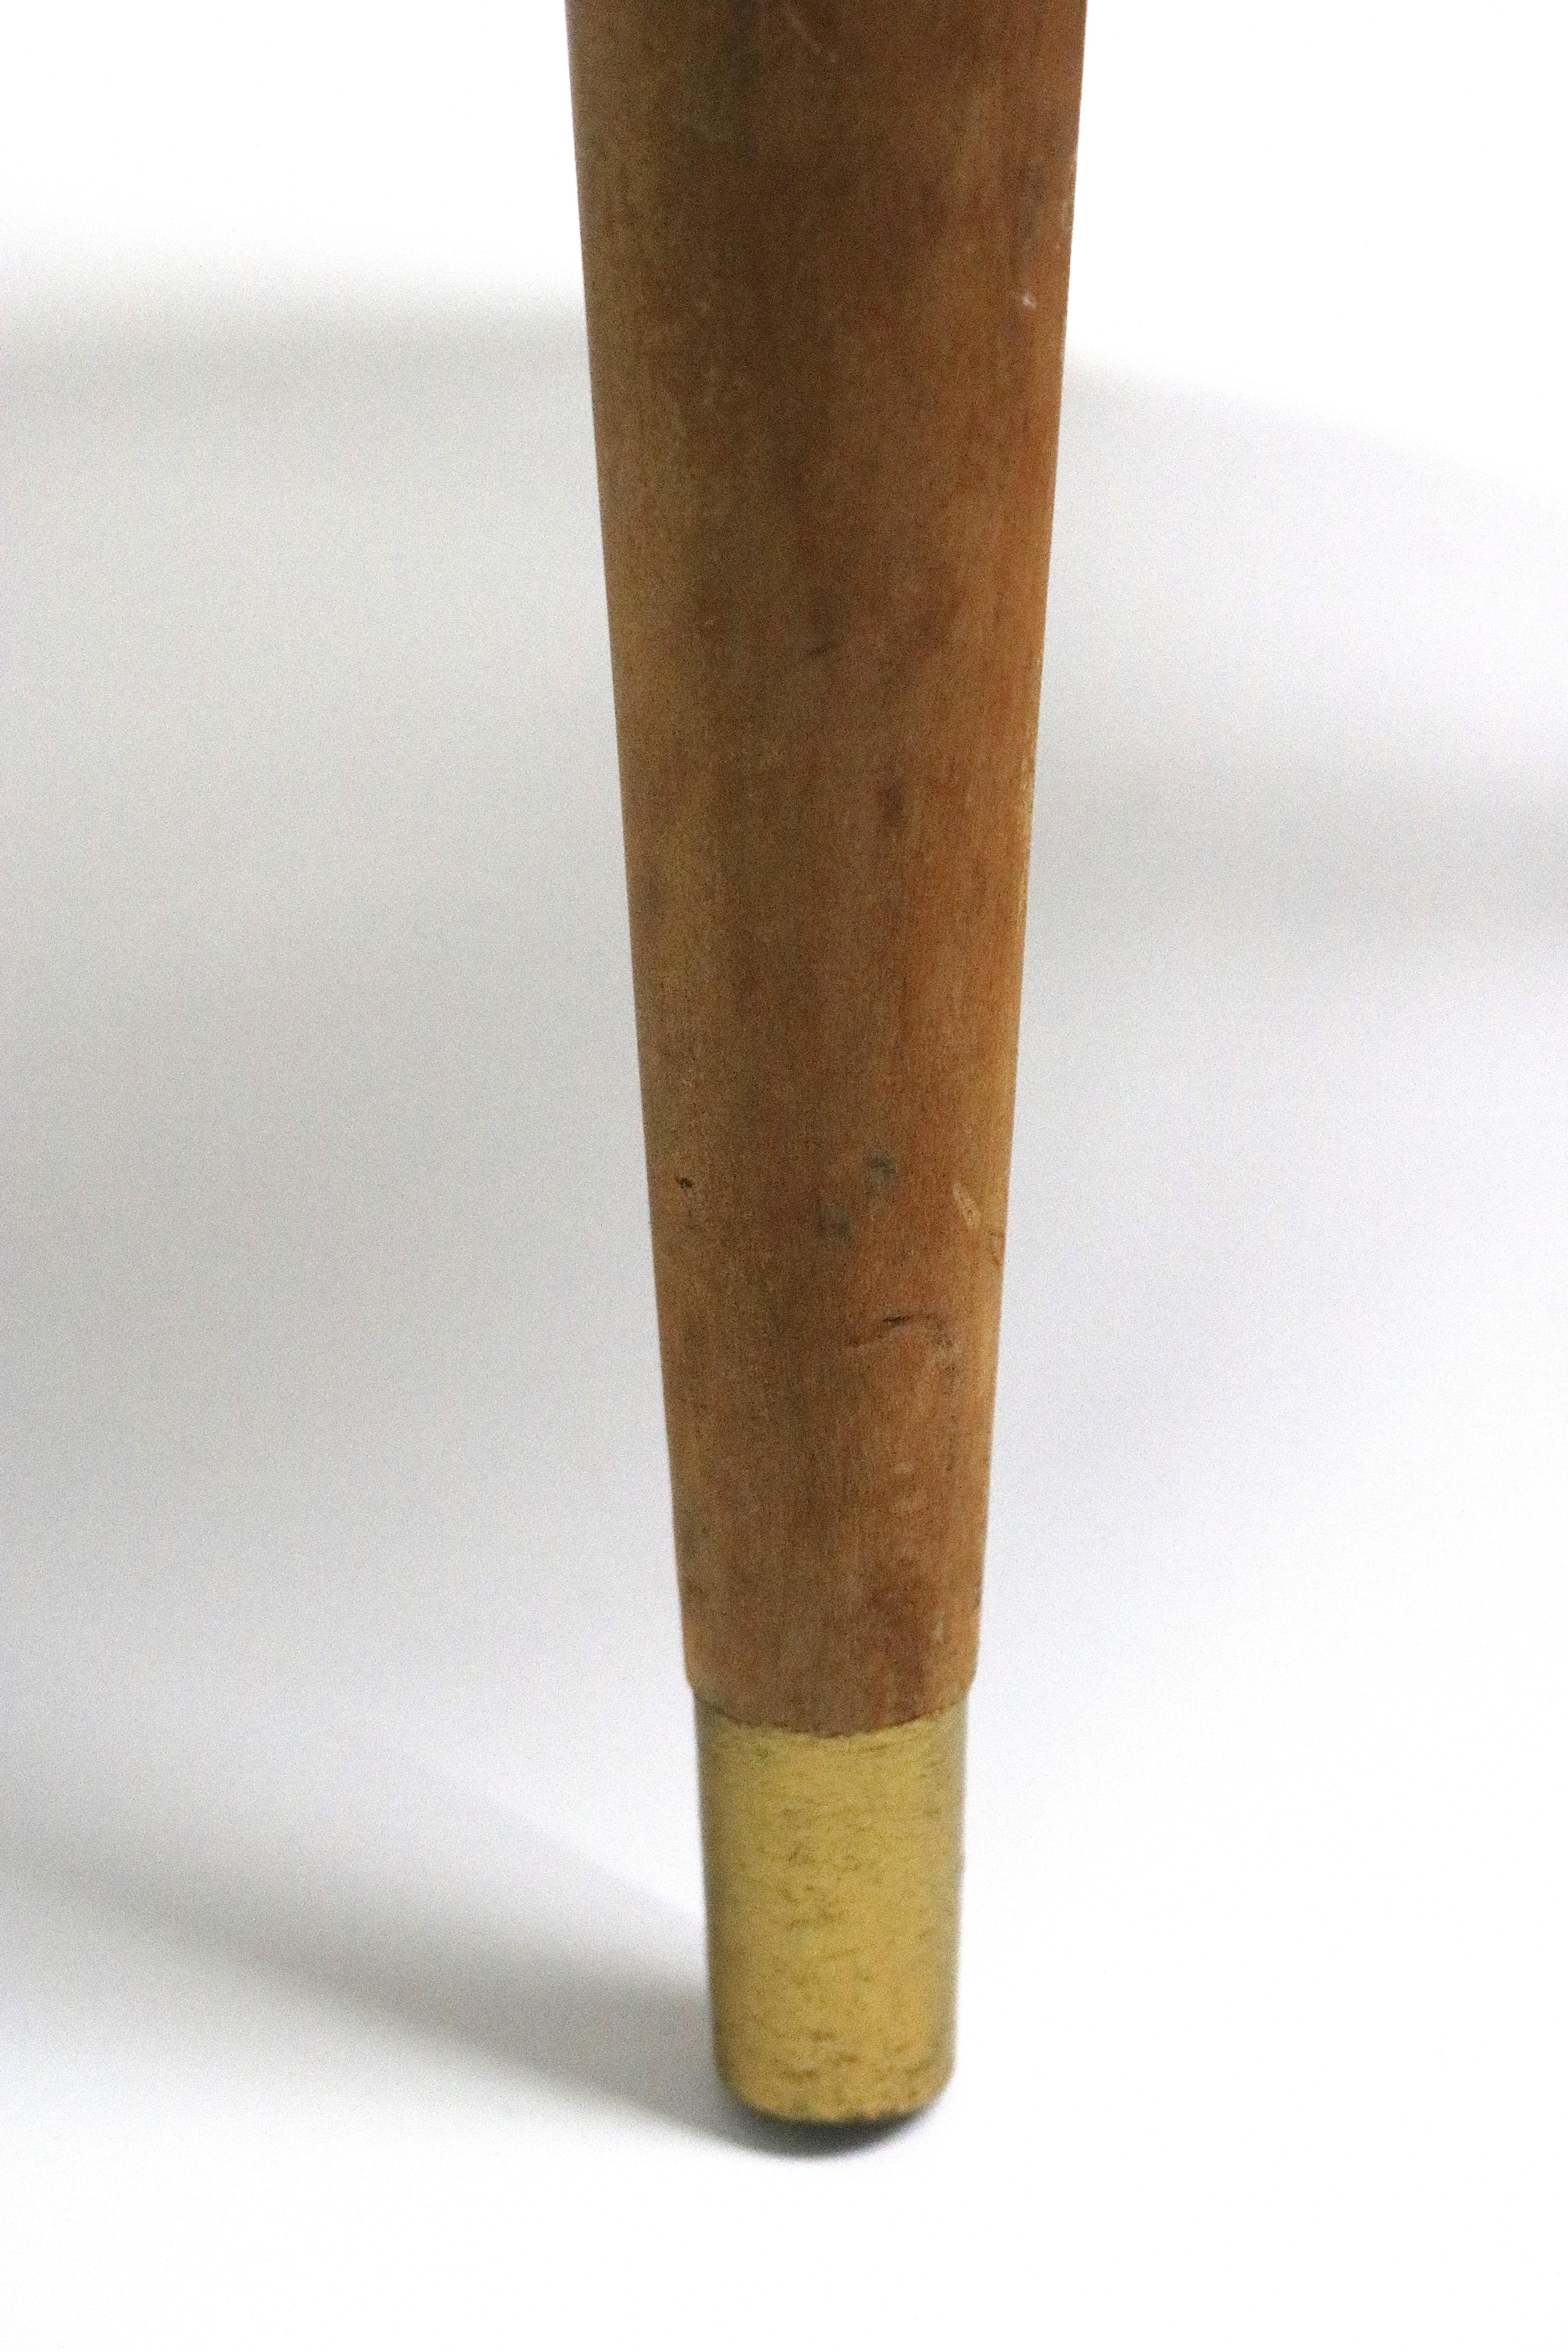 American 1950s Stool Maple Wood Legs, Brass Ferules, Yellow Vinyl Paul McCobb Attribute For Sale